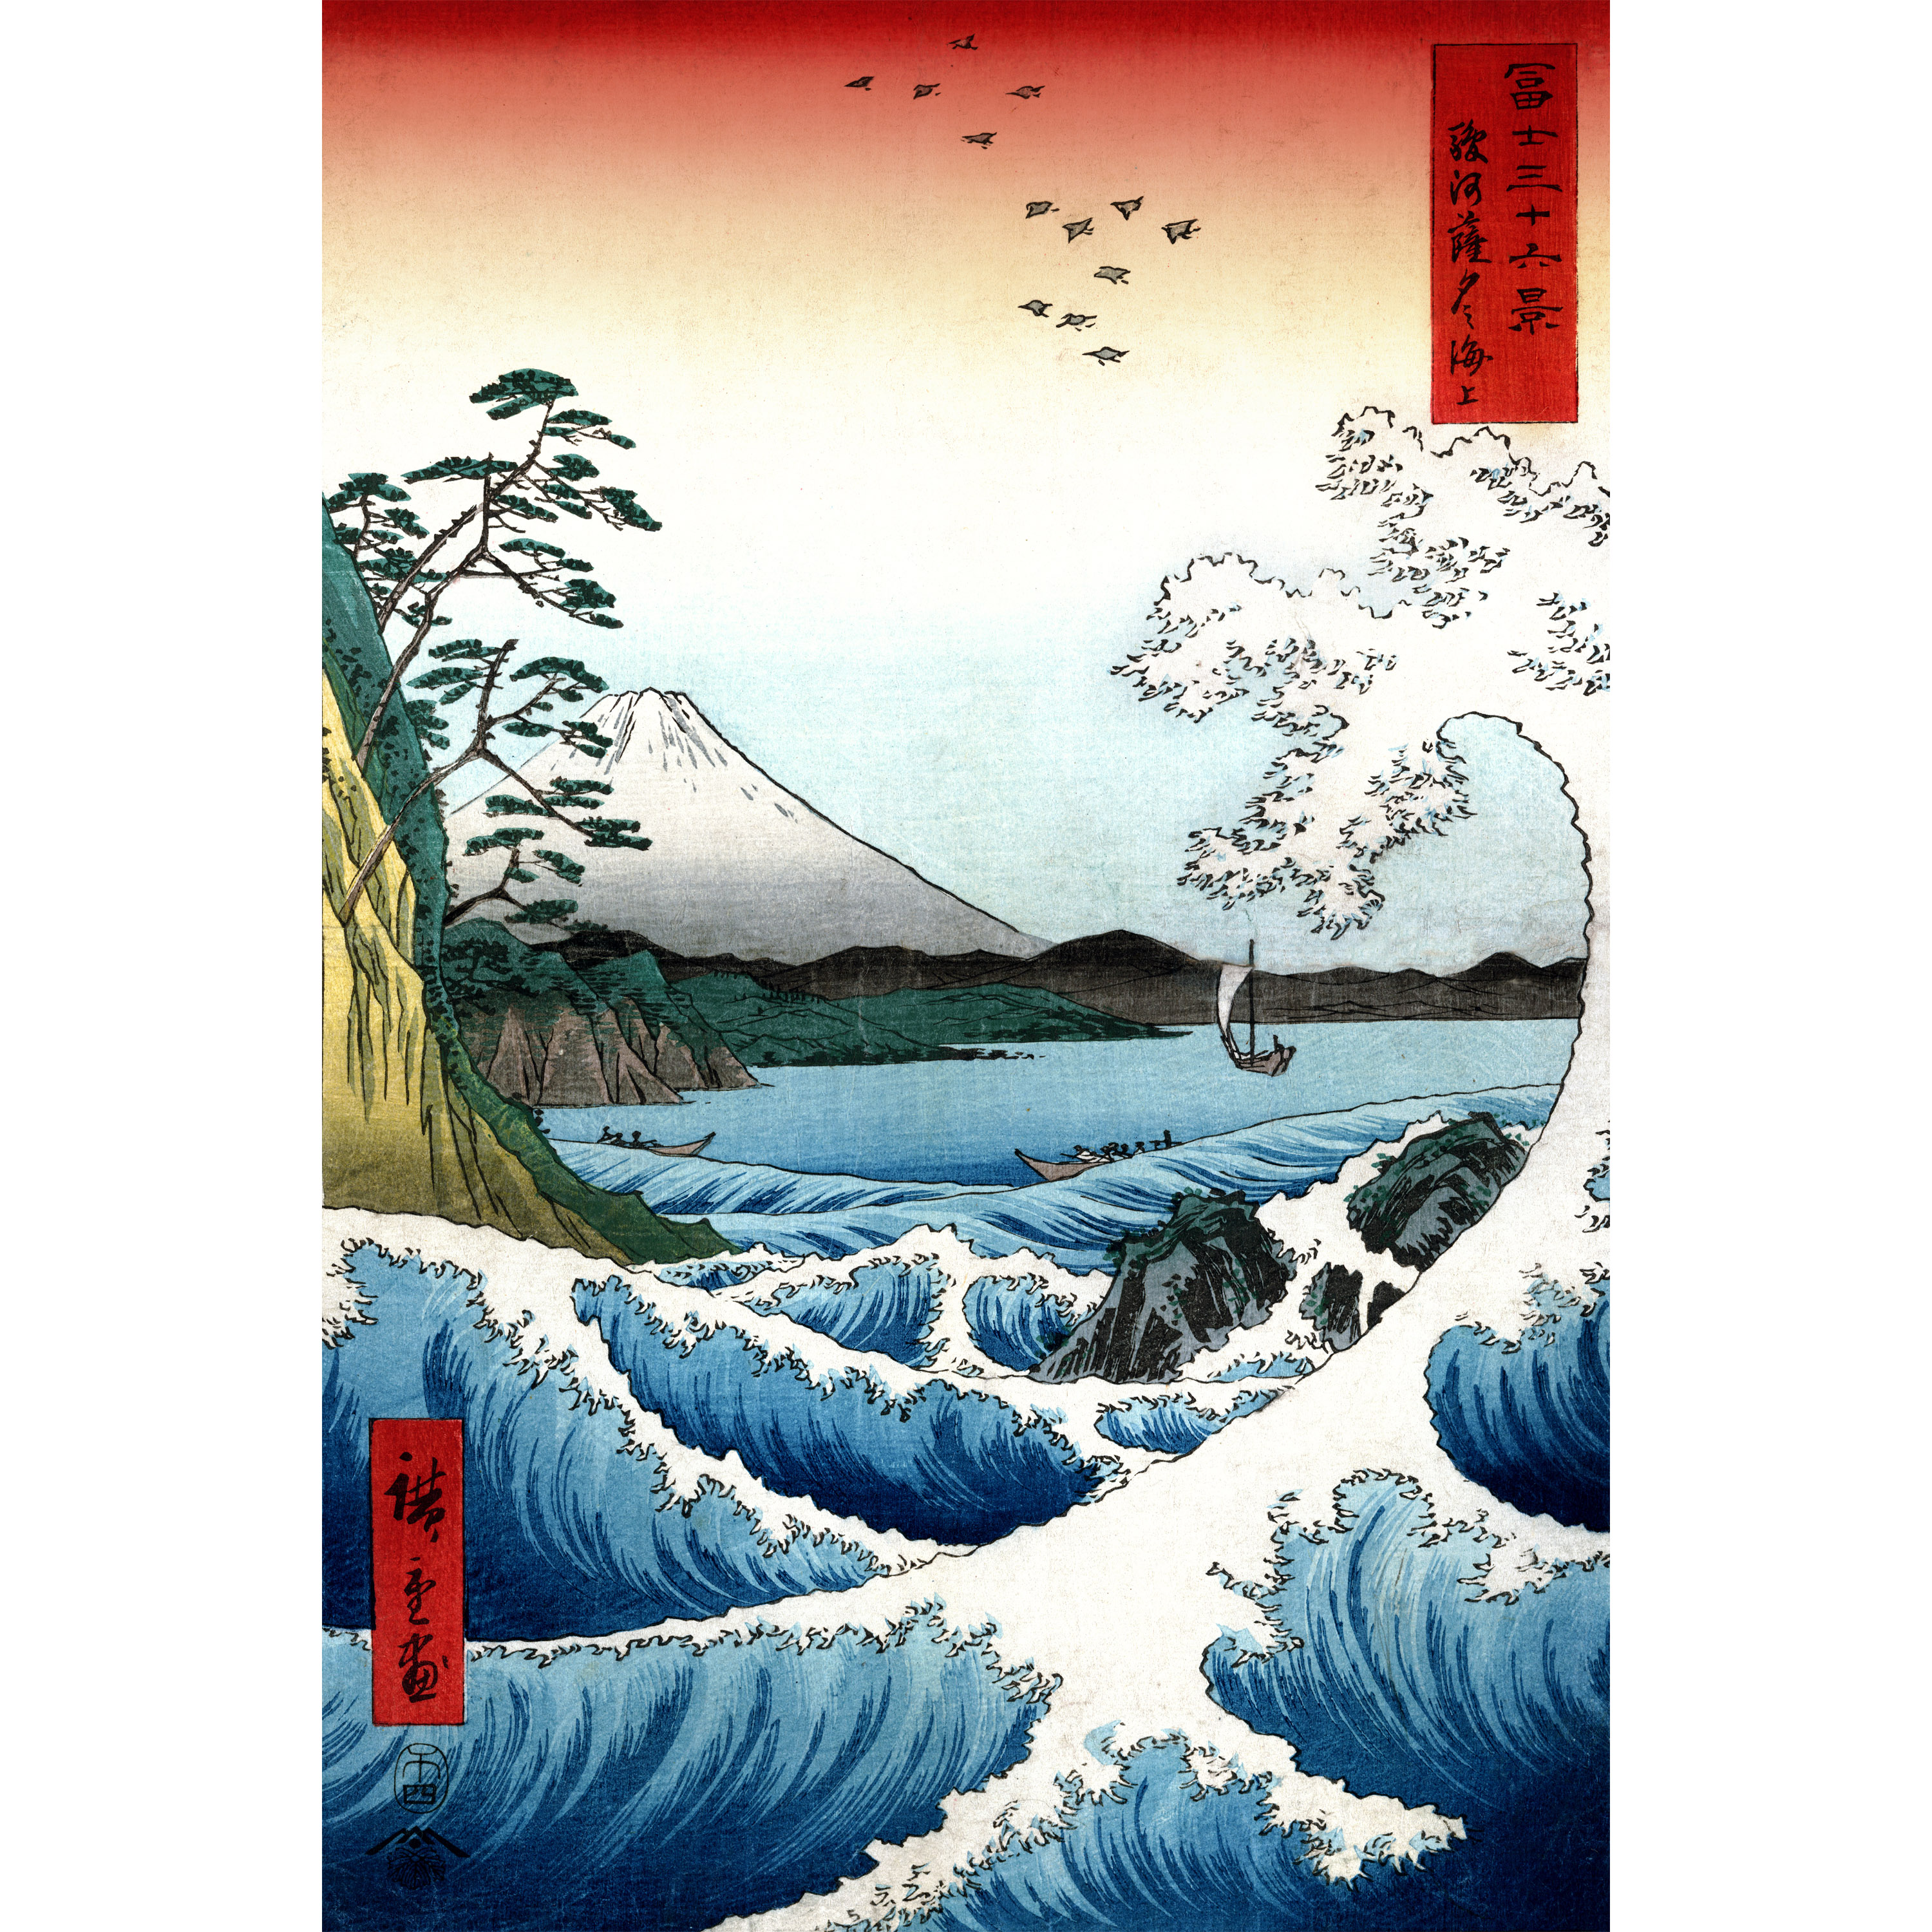 Buy Crashing Waves Ukiyo-e by Hiroshige Wall Art Online 